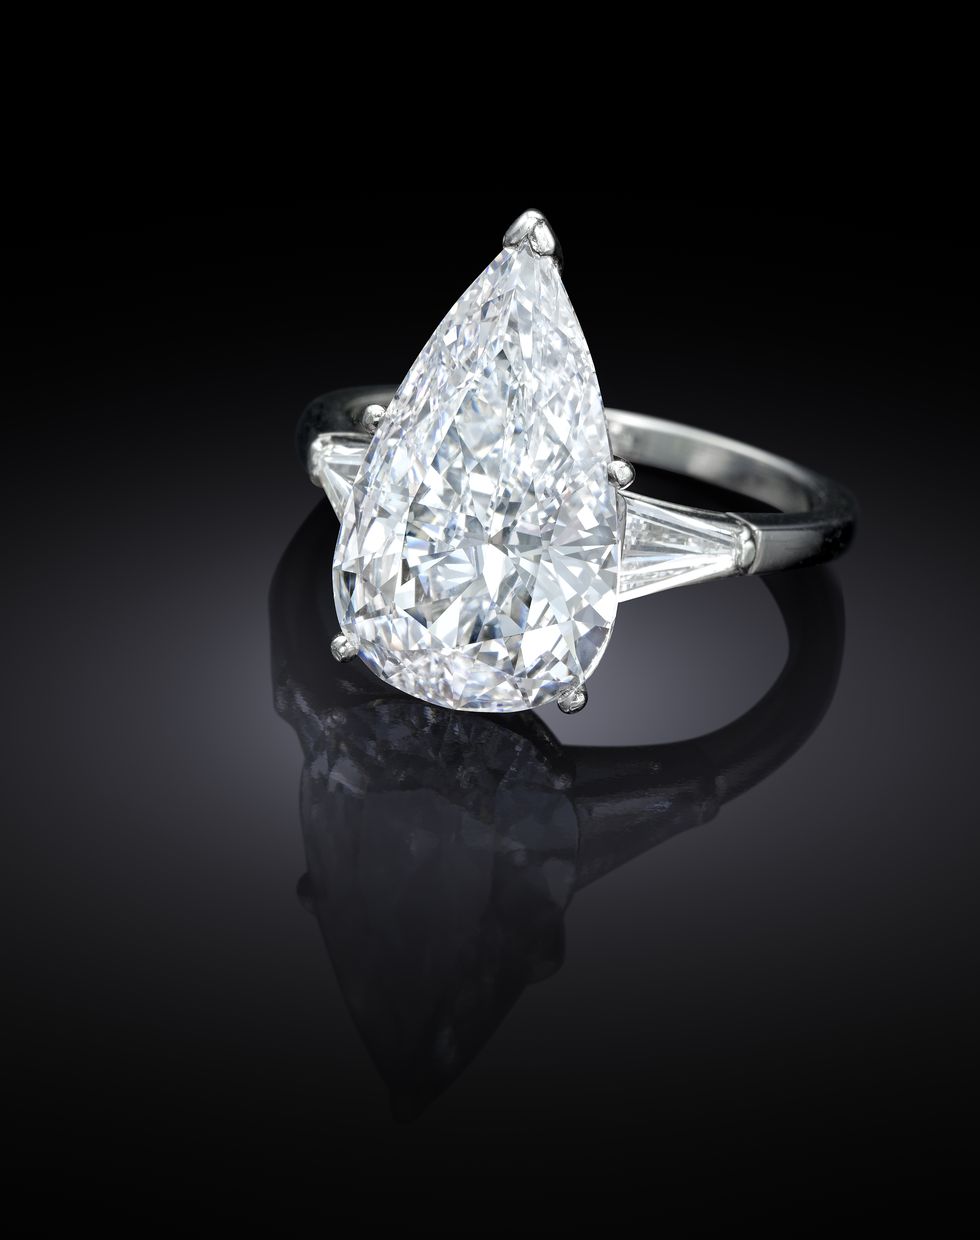 Ring, Engagement ring, Diamond, Jewellery, Fashion accessory, Pre-engagement ring, Platinum, Gemstone, Body jewelry, Still life photography, 